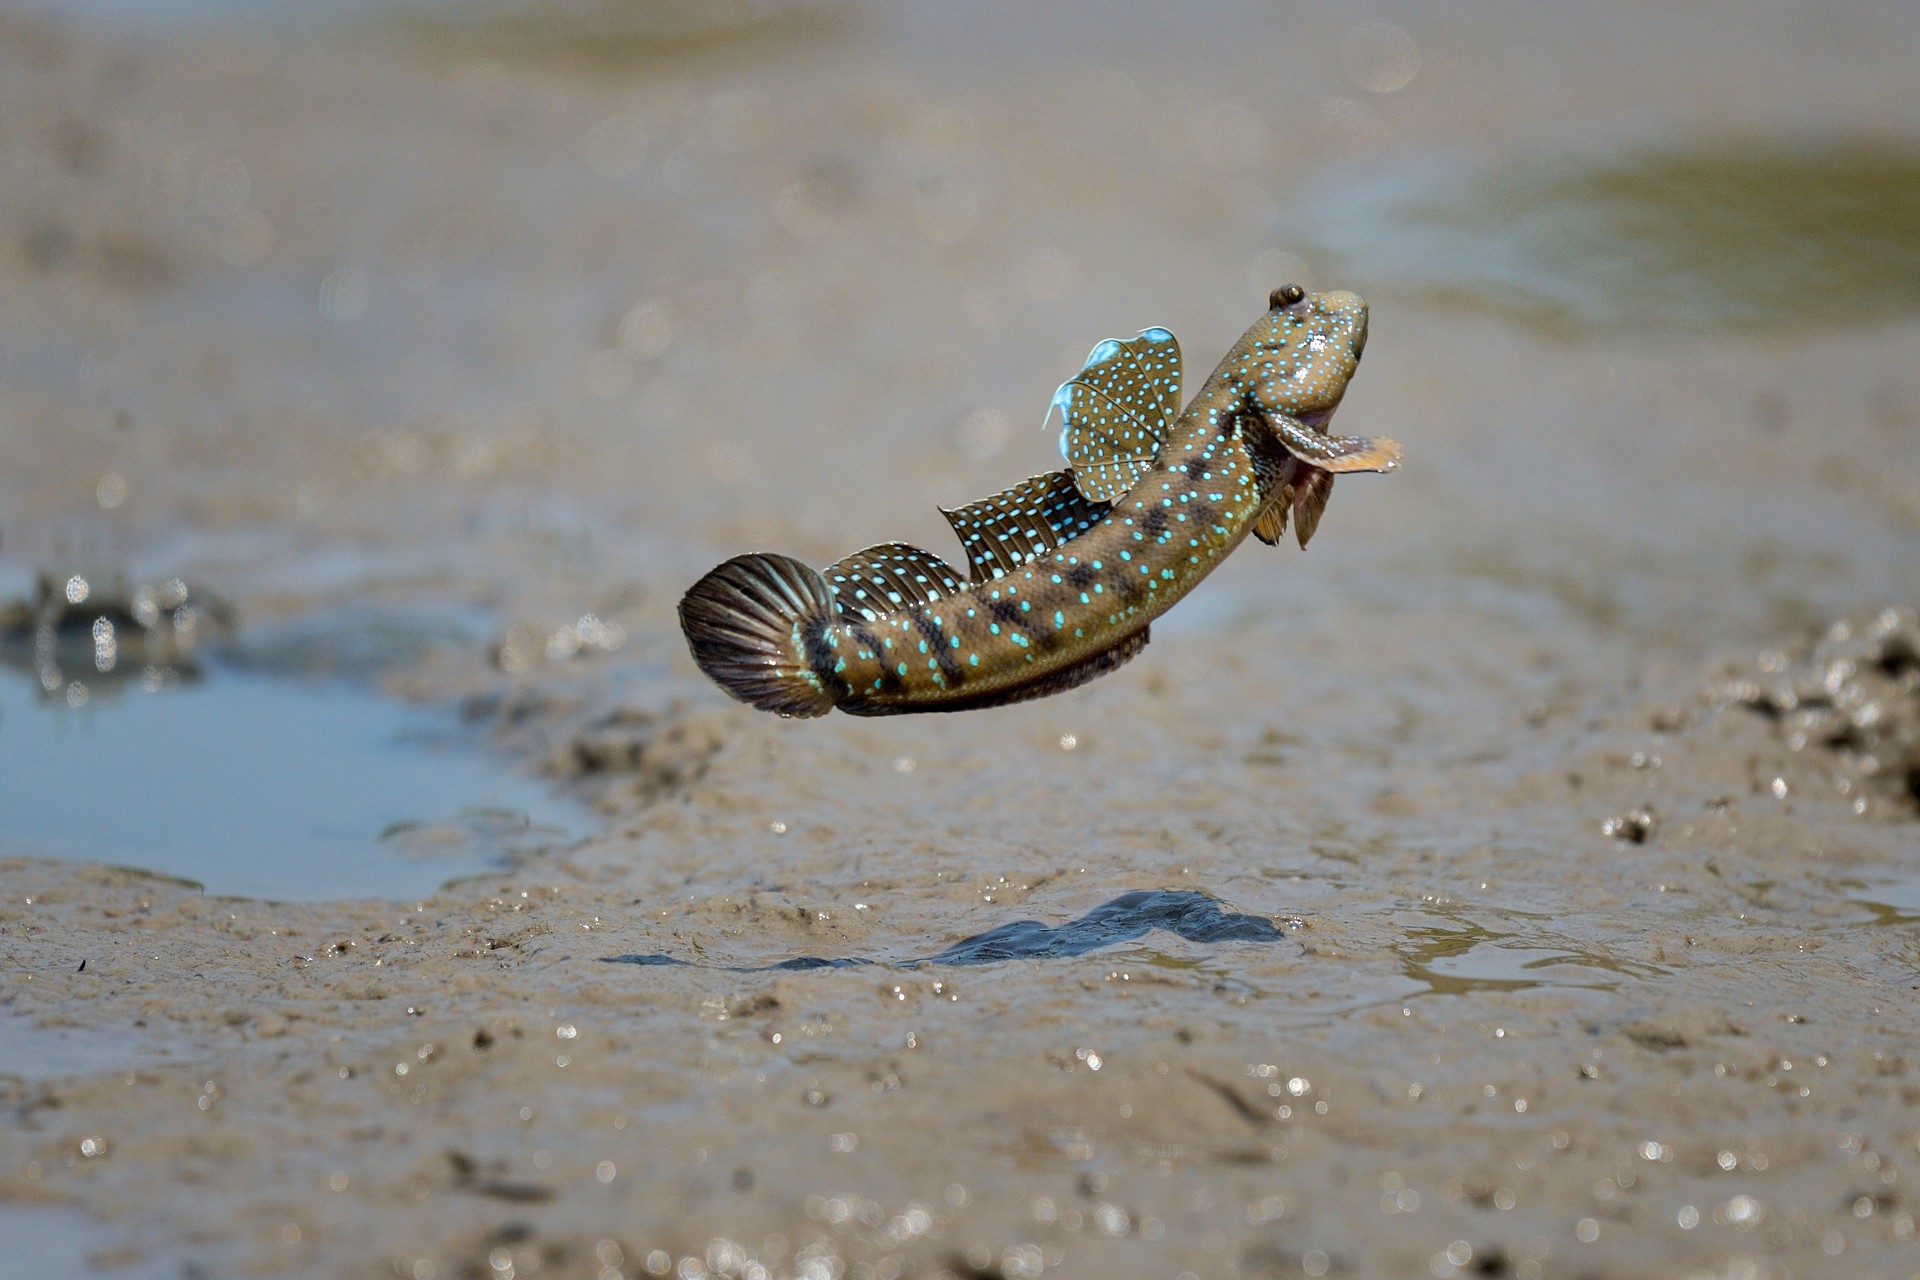 A mudskipper jumps up from the ocean sand